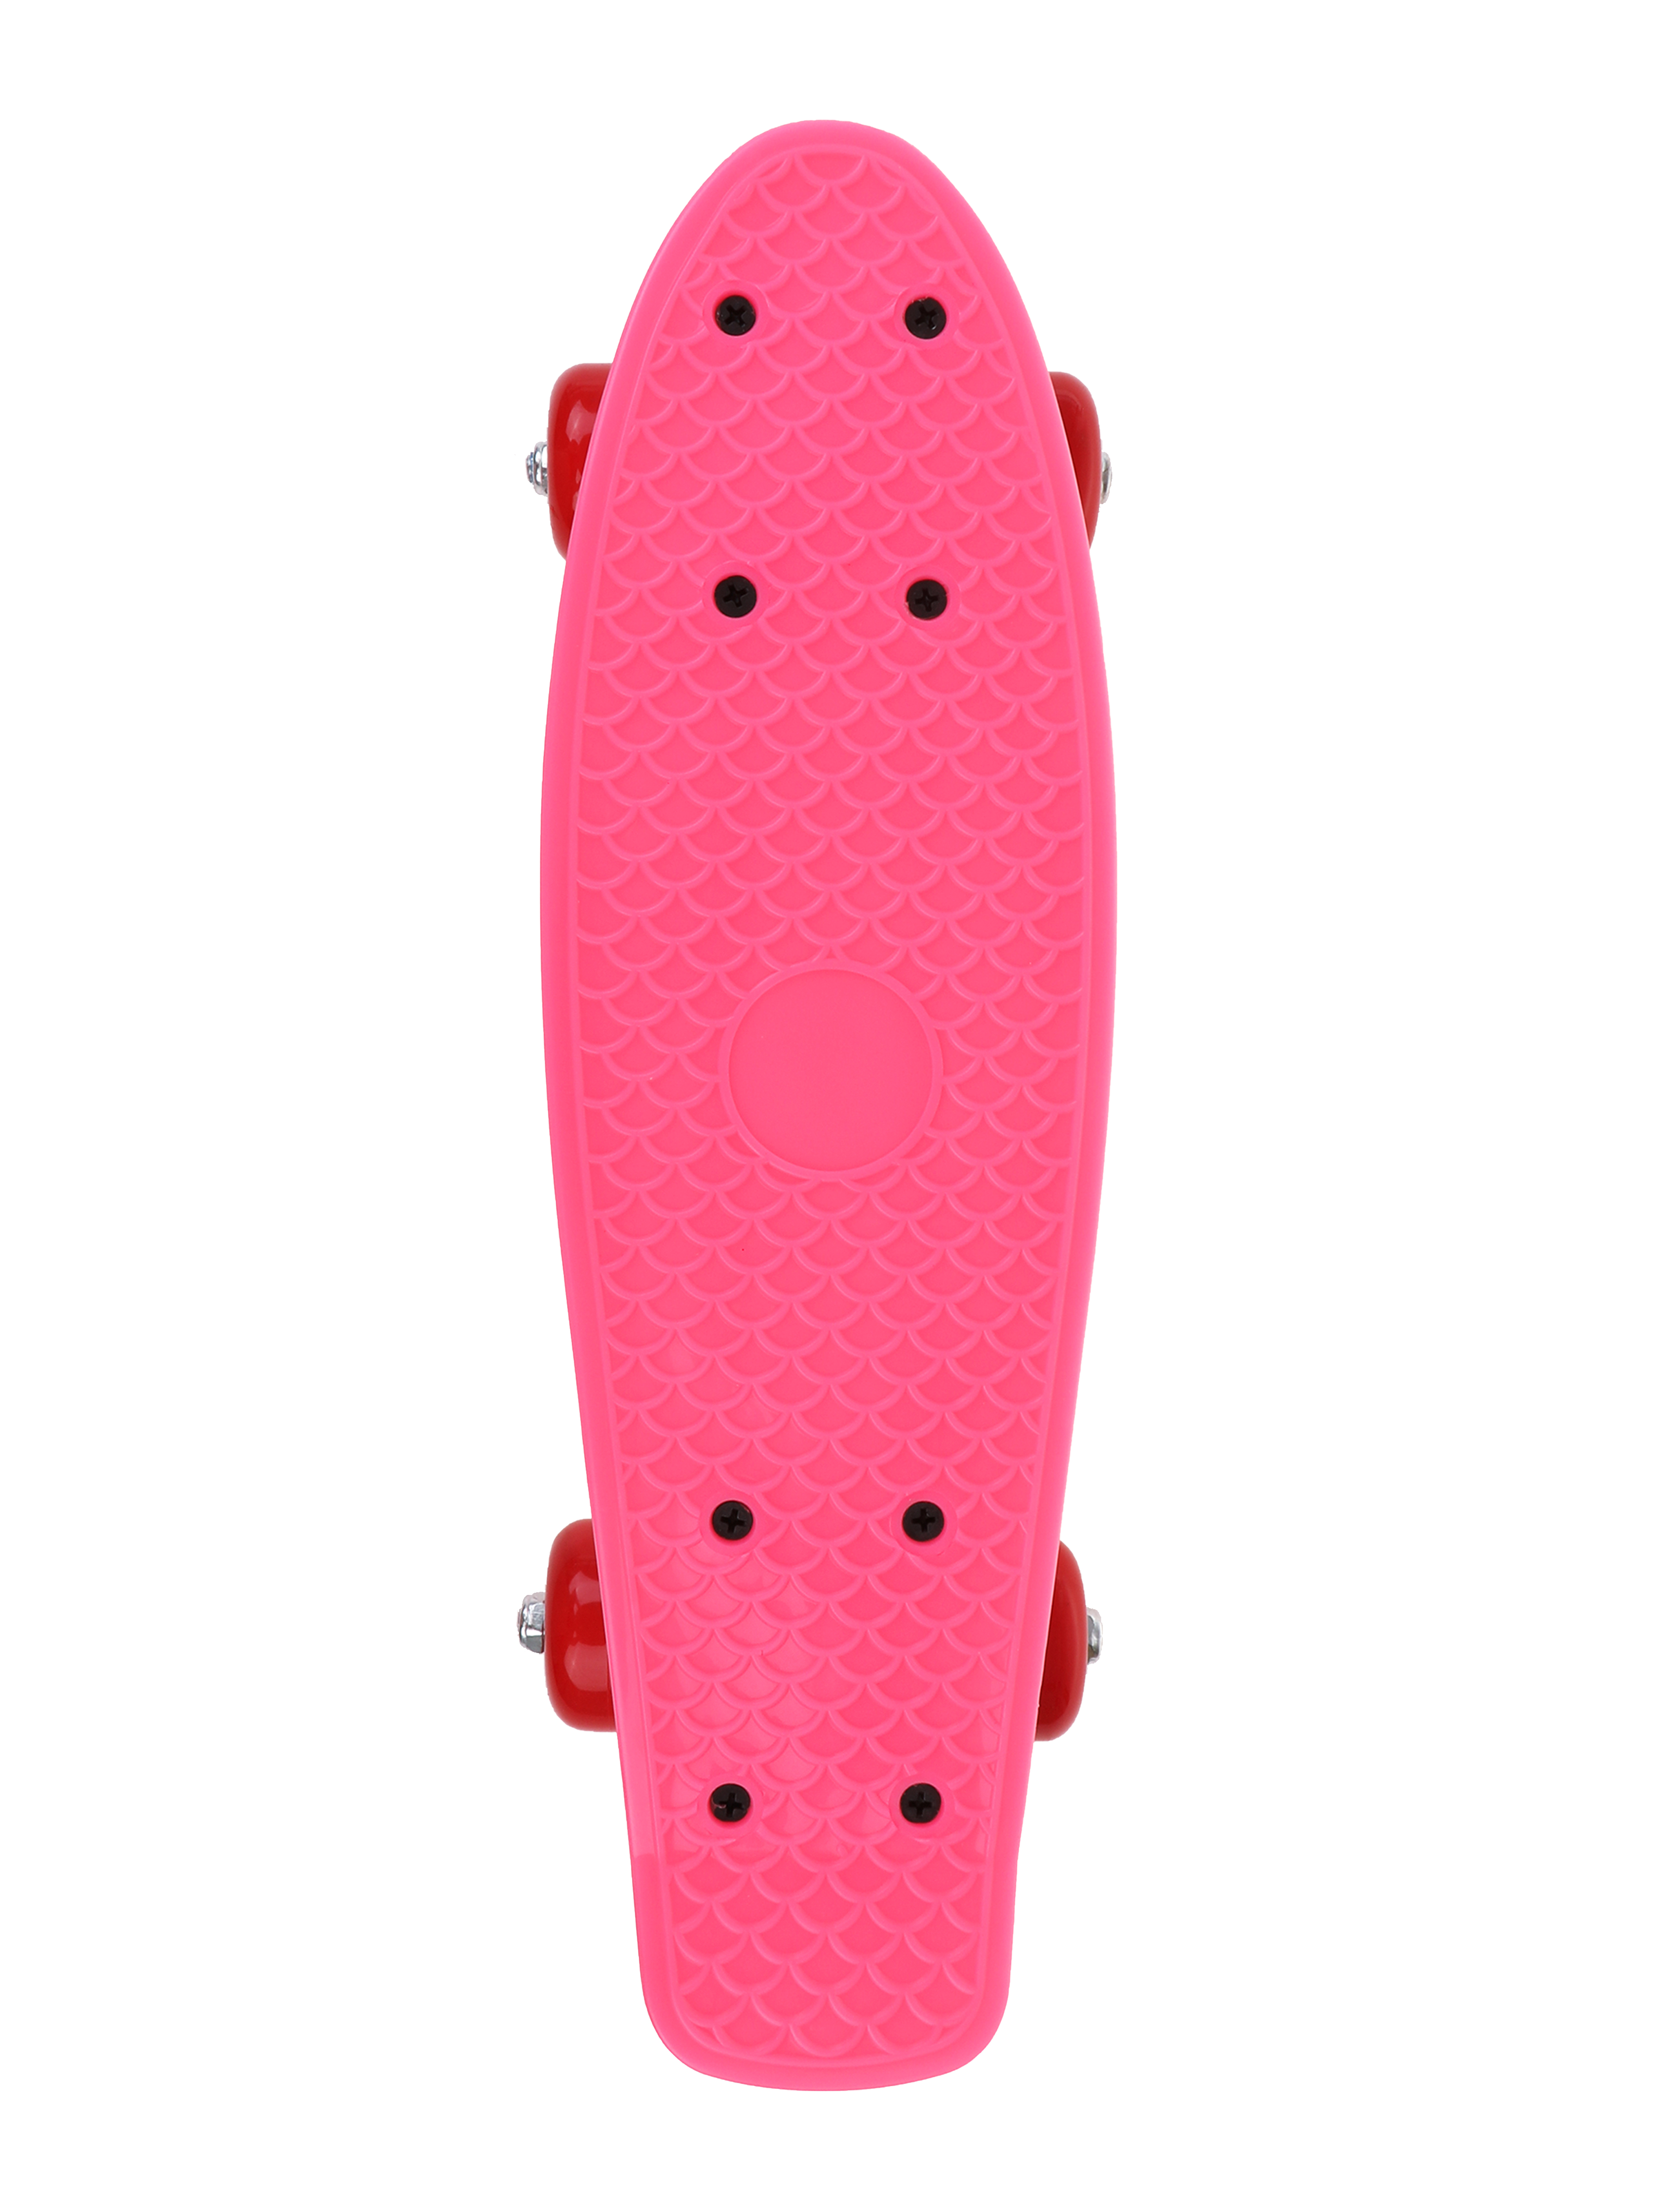 Скейтборд Наша Игрушка пенниборд пластик 41*12 см колеса PVC крепления пластик розовый - фото 3